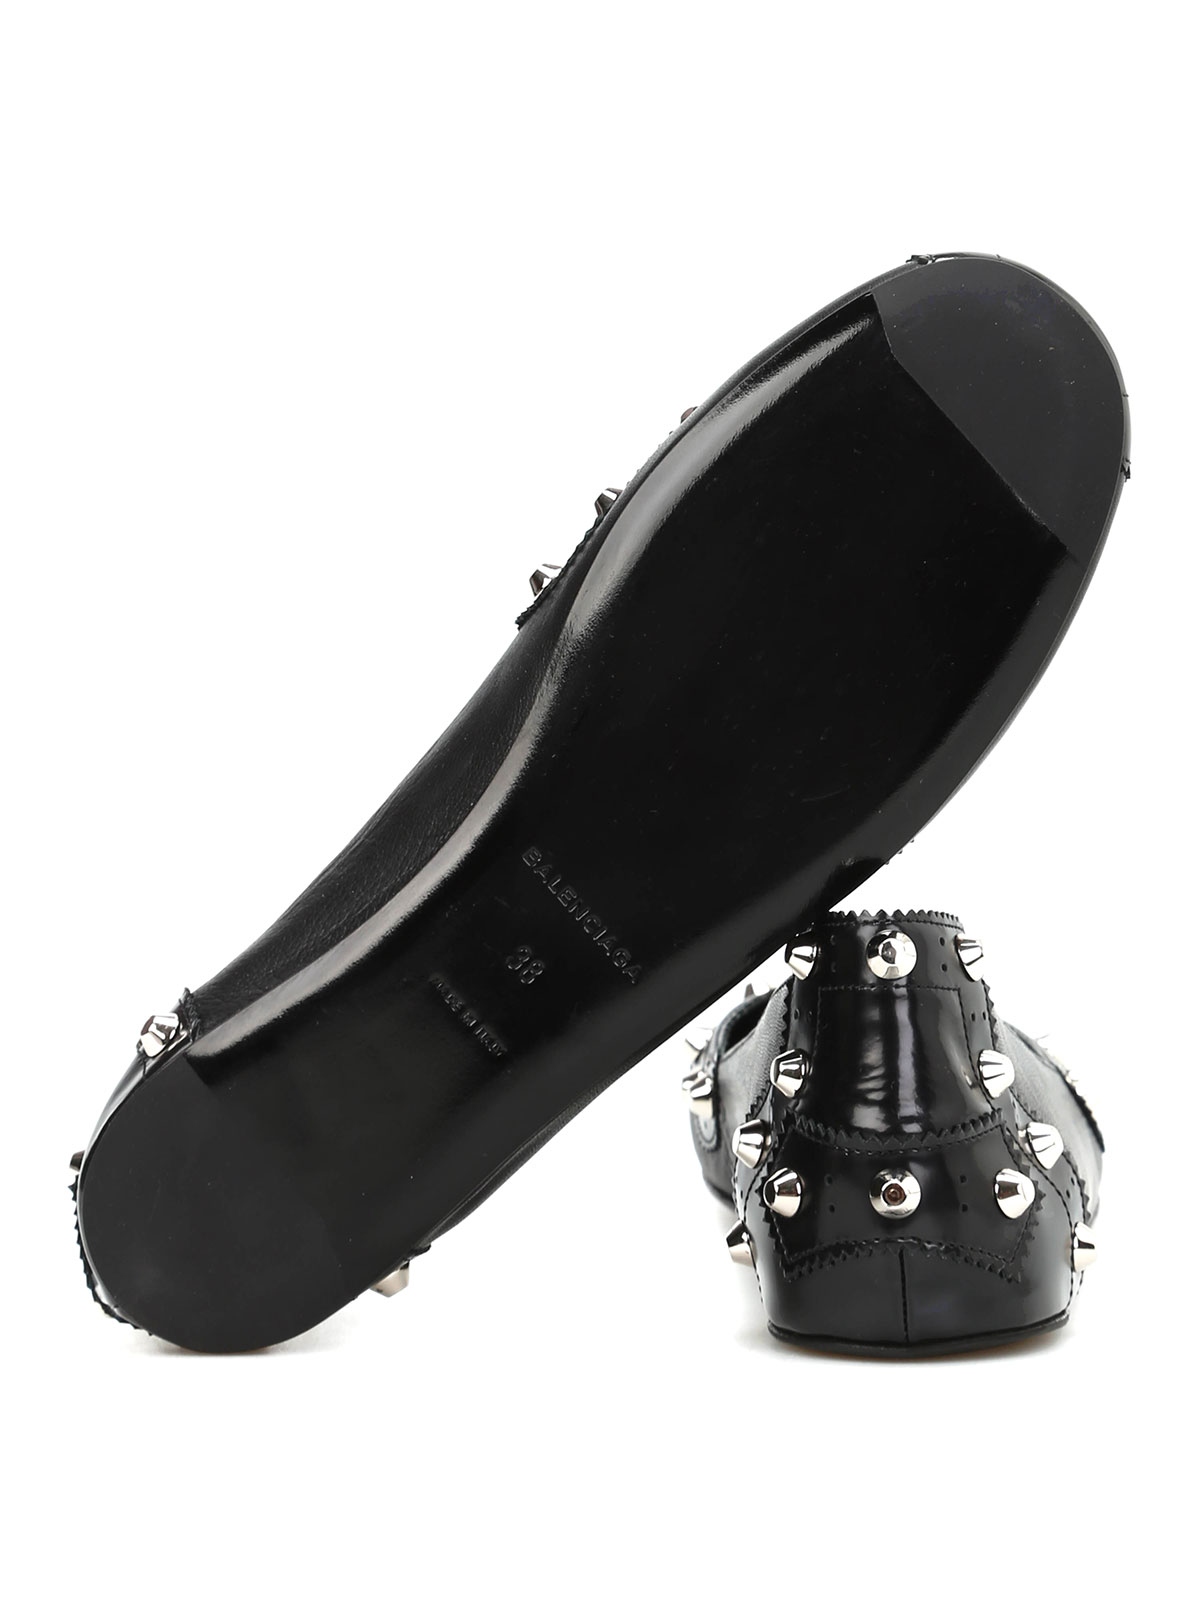 BALENCIAGA Le Cagole sabot in Arena leather  Black  Balenciaga flat shoes  715556WAD4F online on GIGLIOCOM